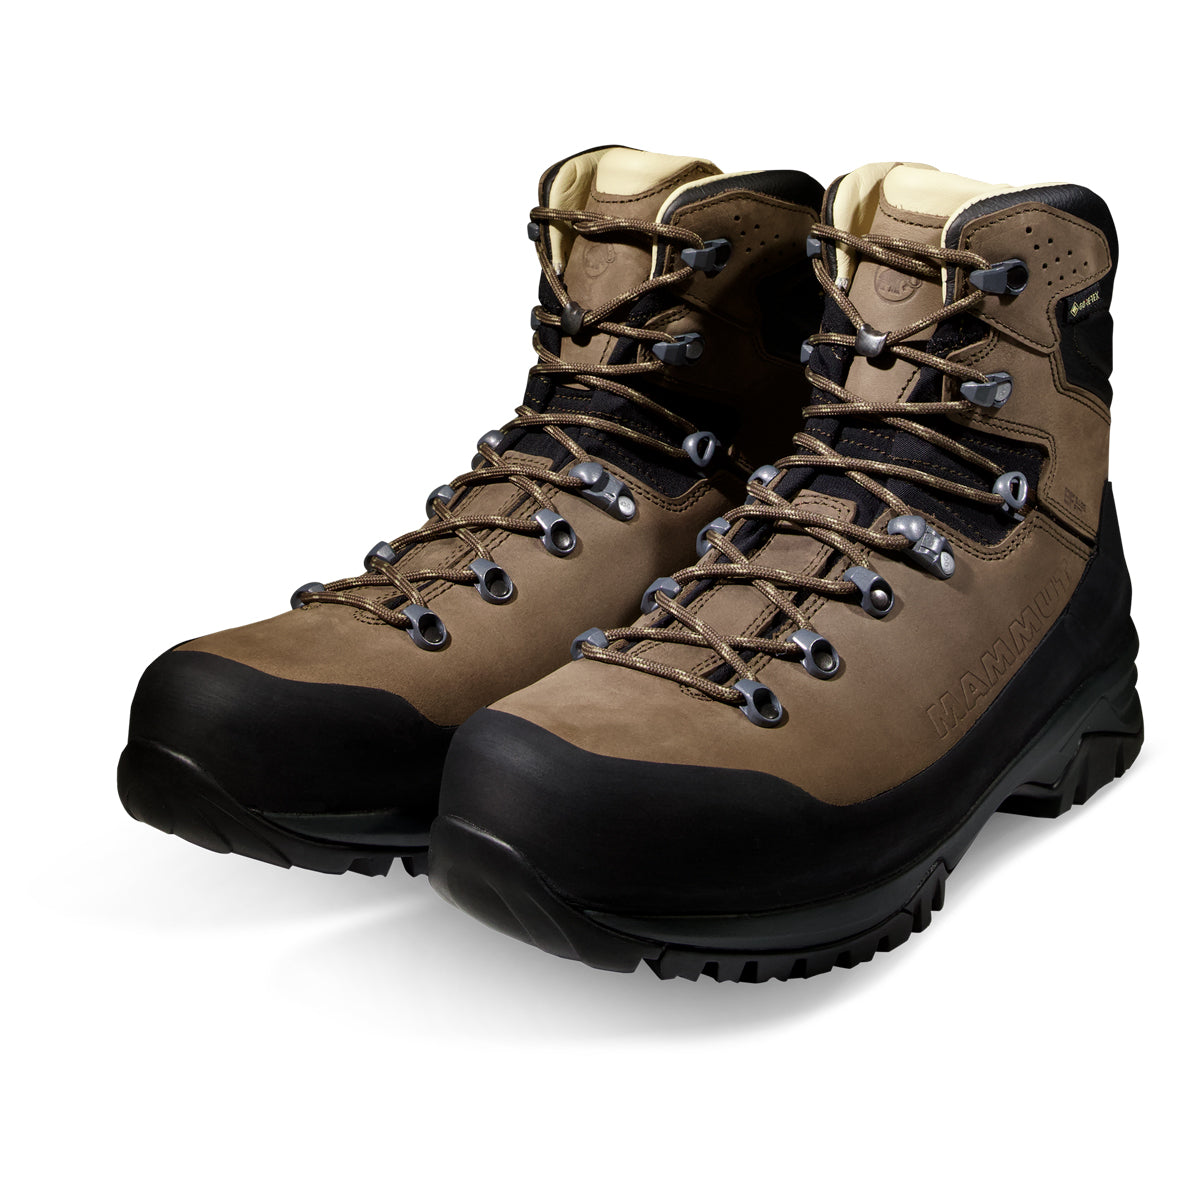 Mammut Trovat Guide High Gtx Men's Hiking Boot Review Hot Sale ...